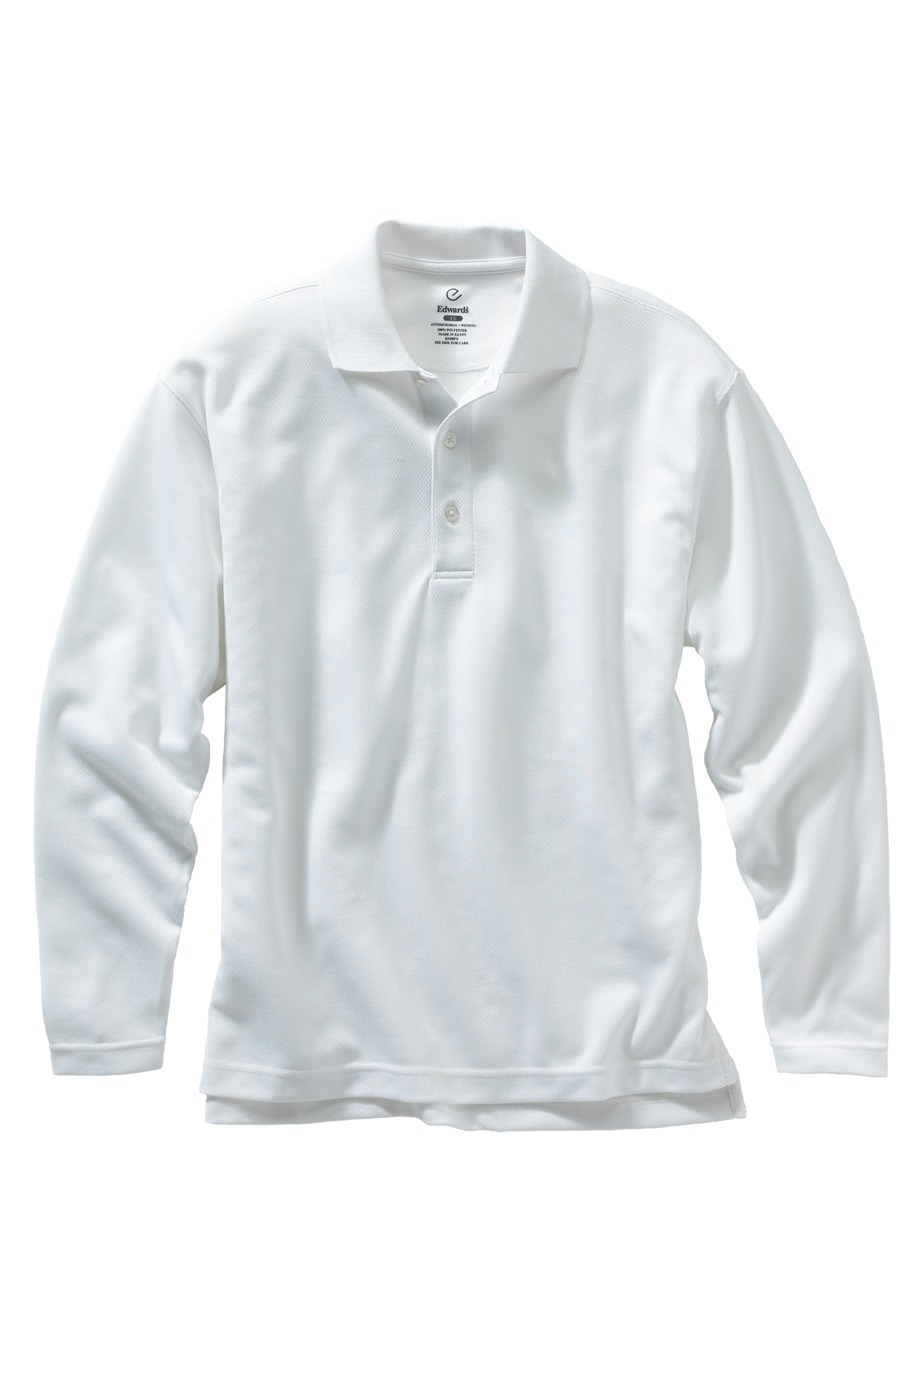 Edwards Garment 1578 - Dry-Mesh Long Sleeve Polo